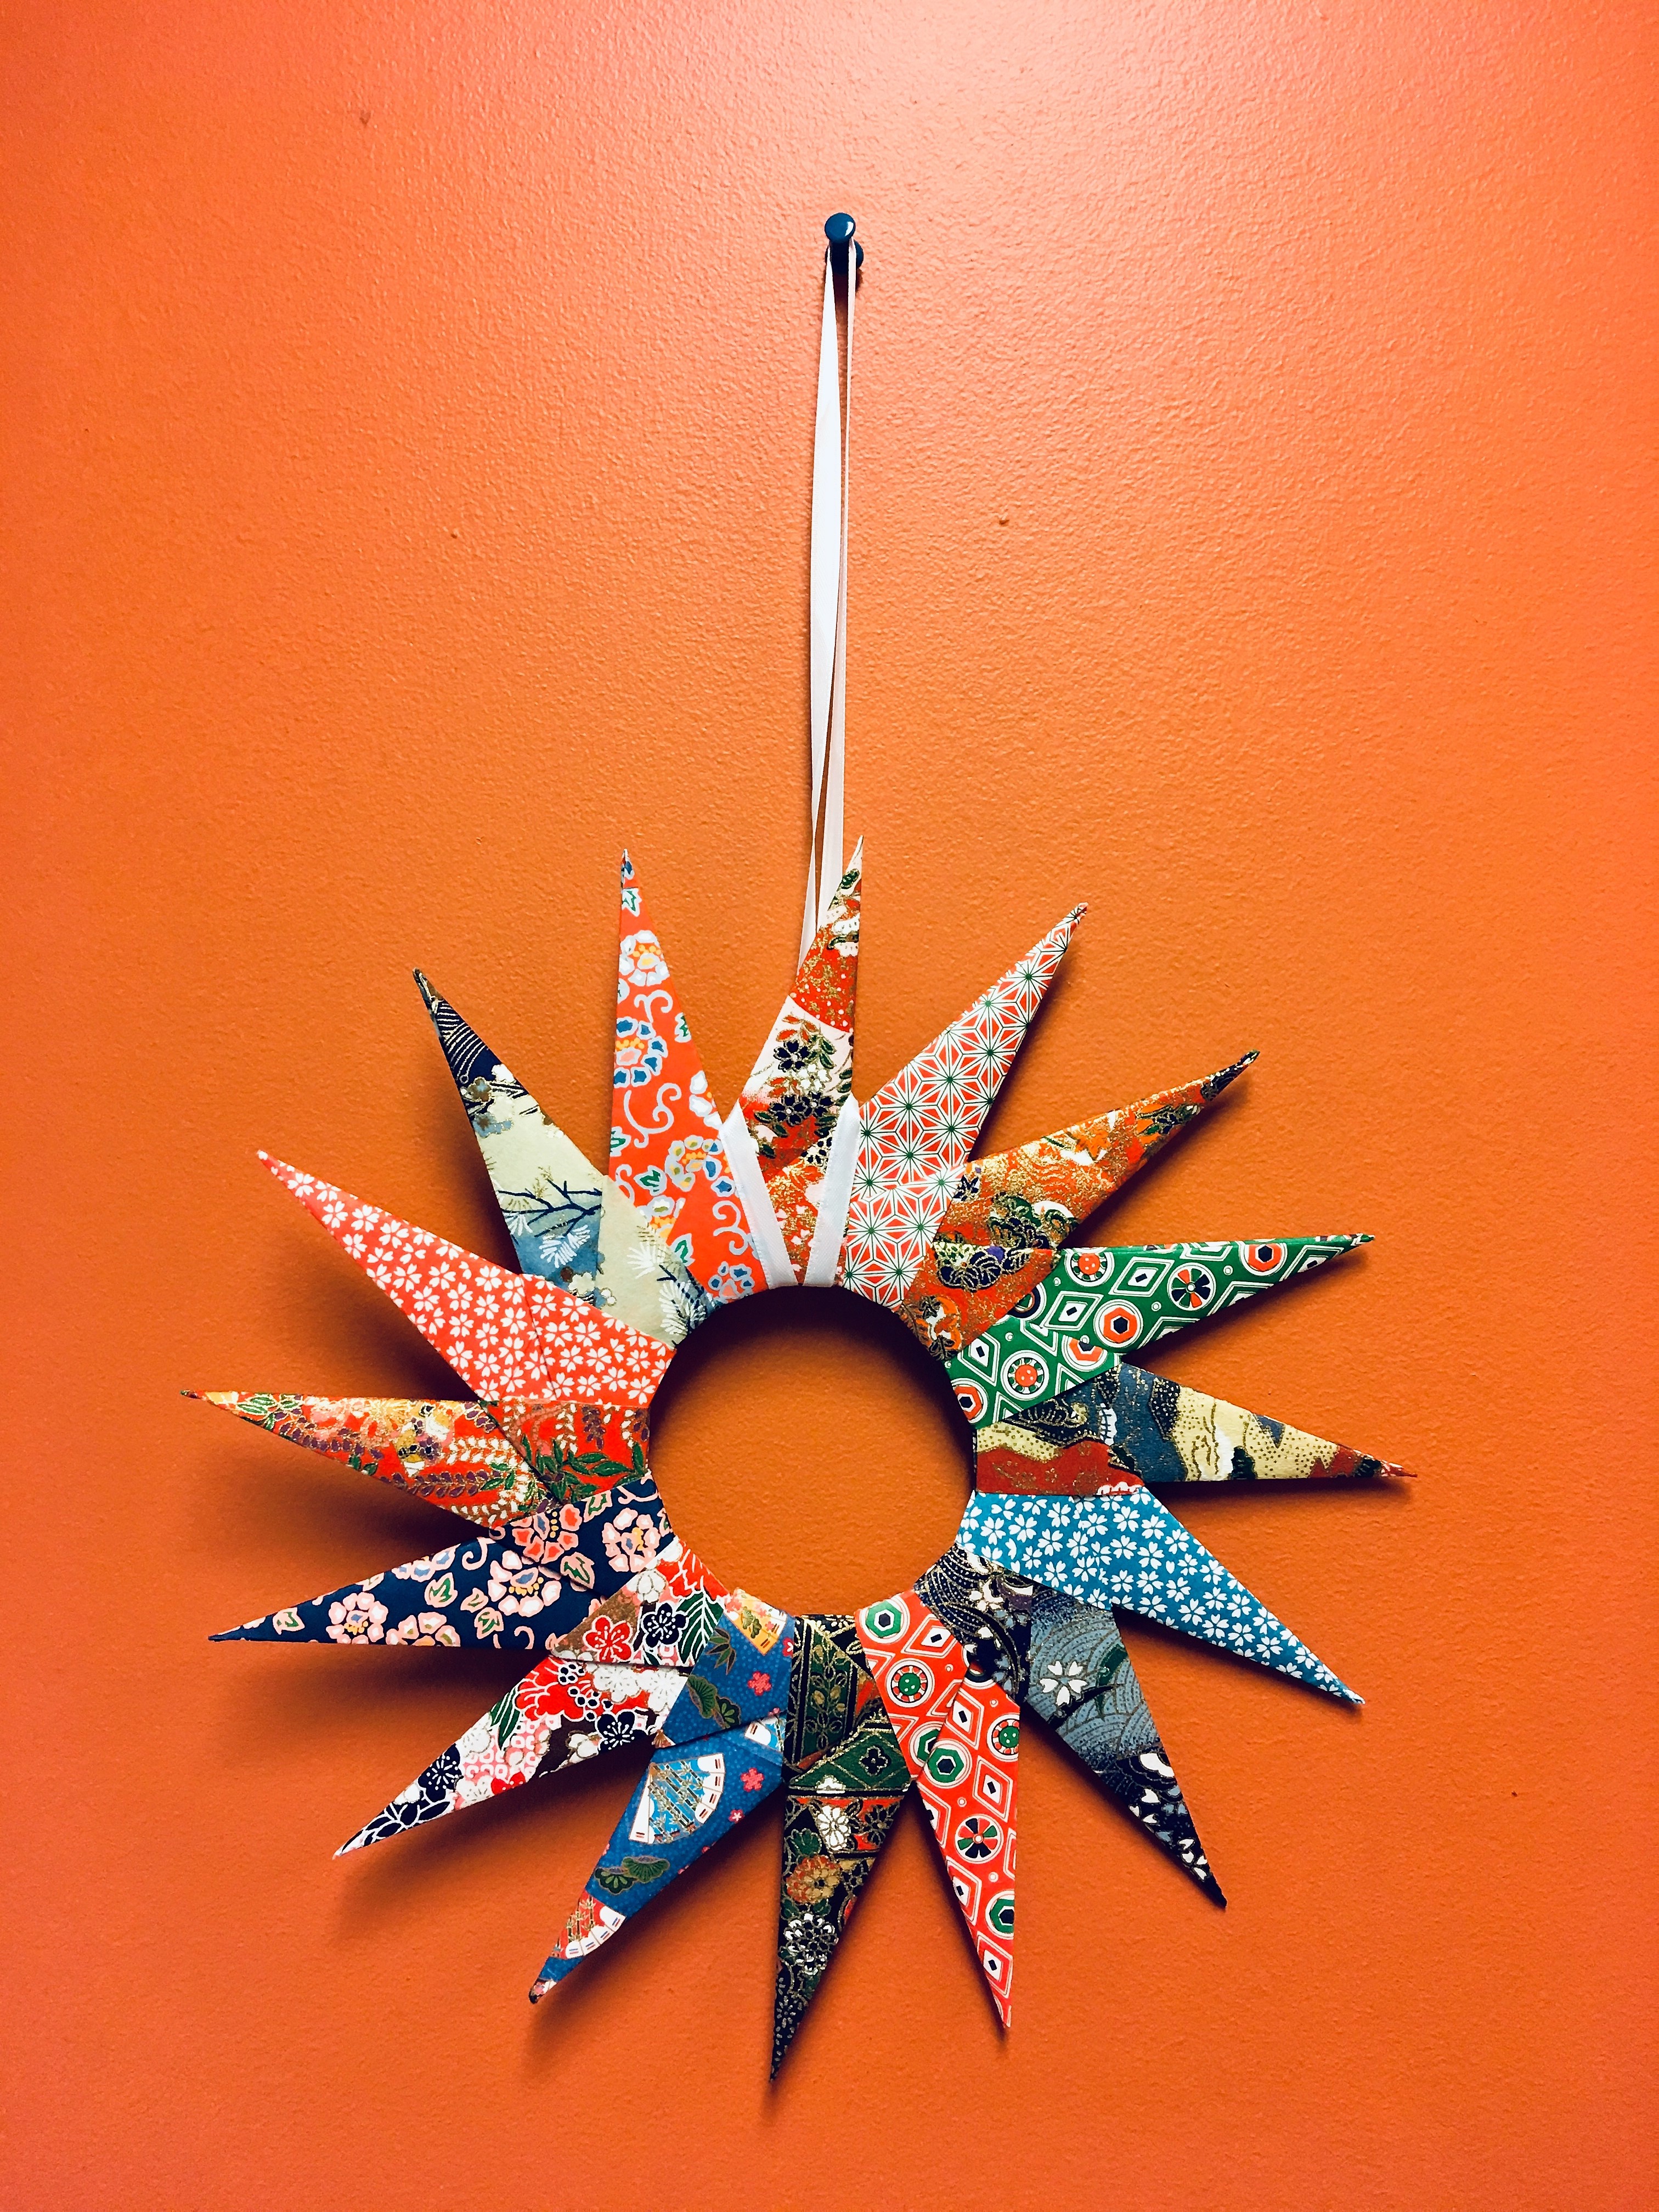 Origami wreath Medfield Public Library